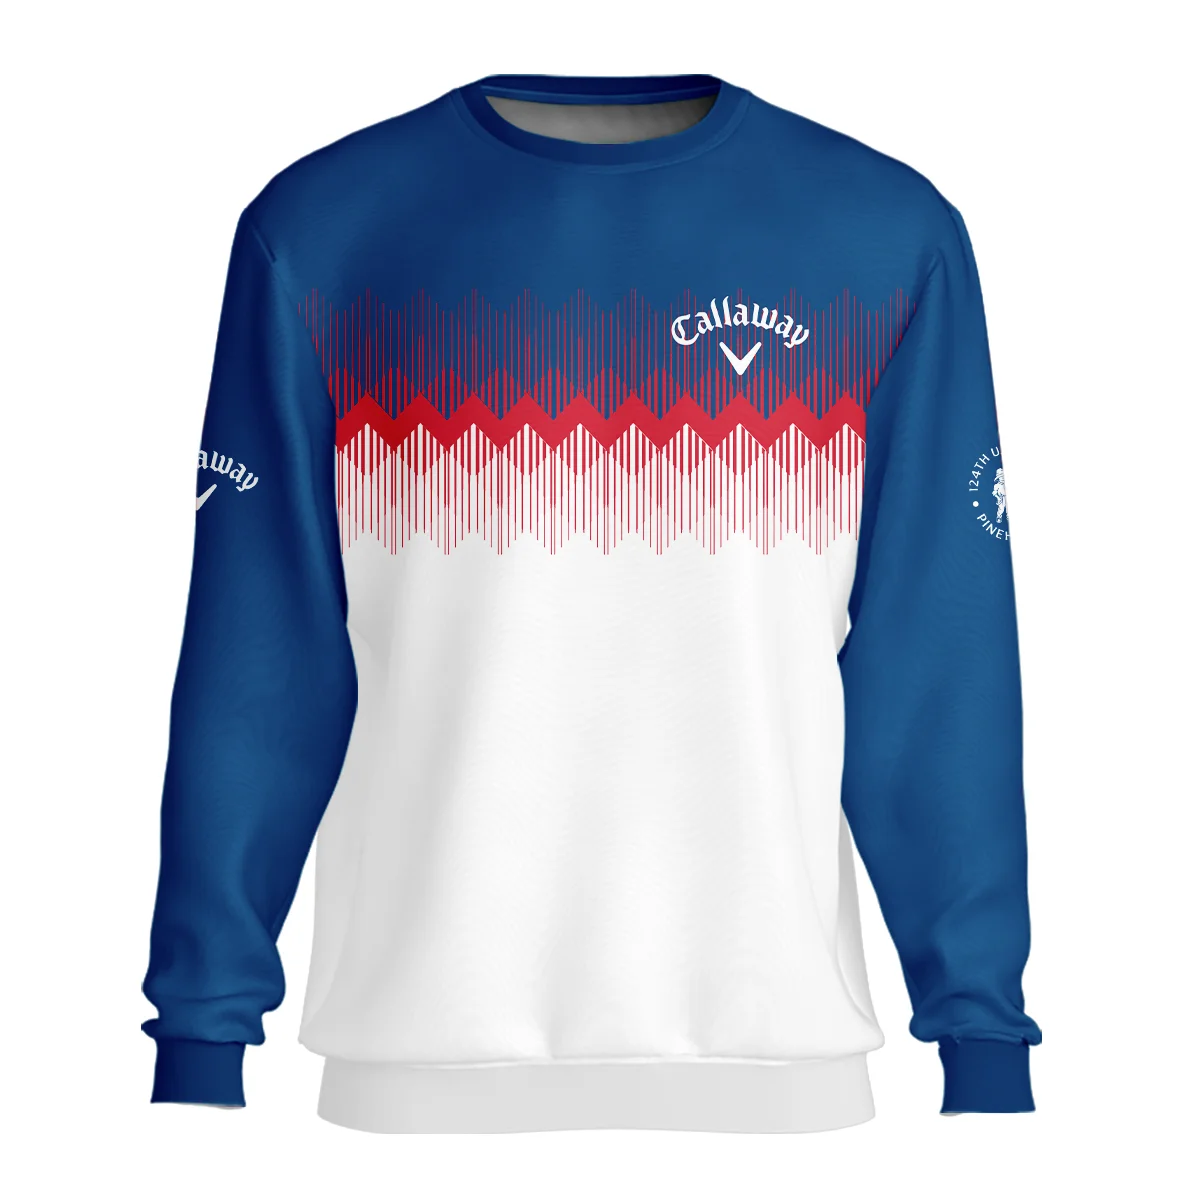 Callaway 124th U.S. Open Pinehurst Unisex Sweatshirt Blue Red Fabric Pattern Golf Sweatshirt